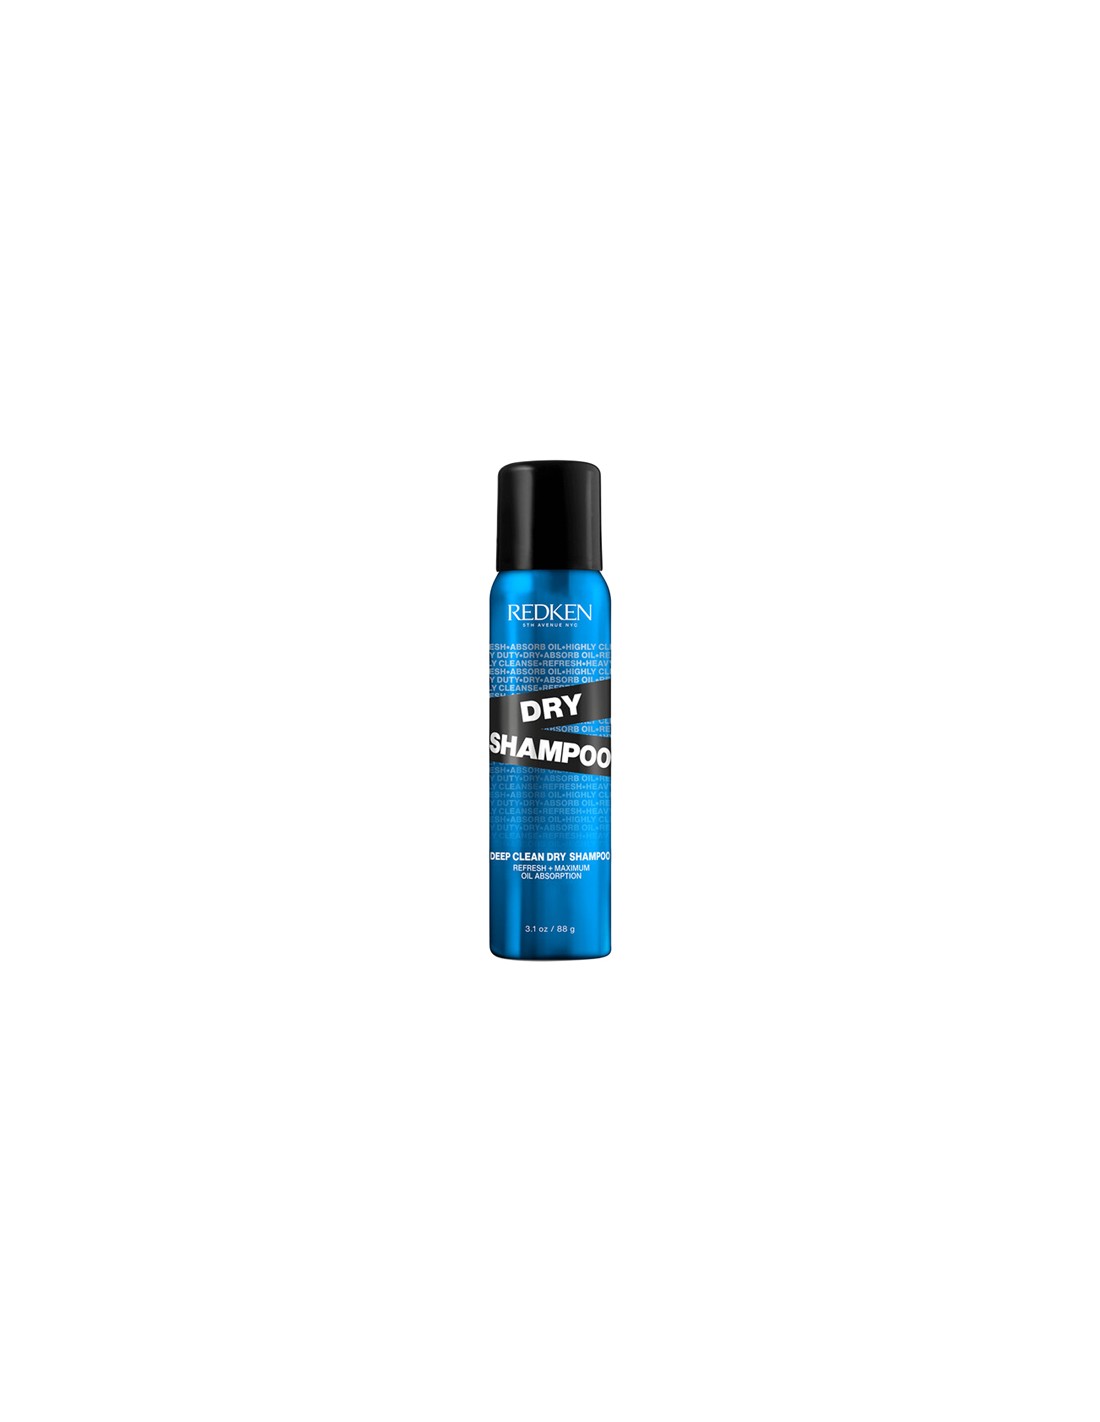 Redken Deep Clean Dry shampoo - 88g